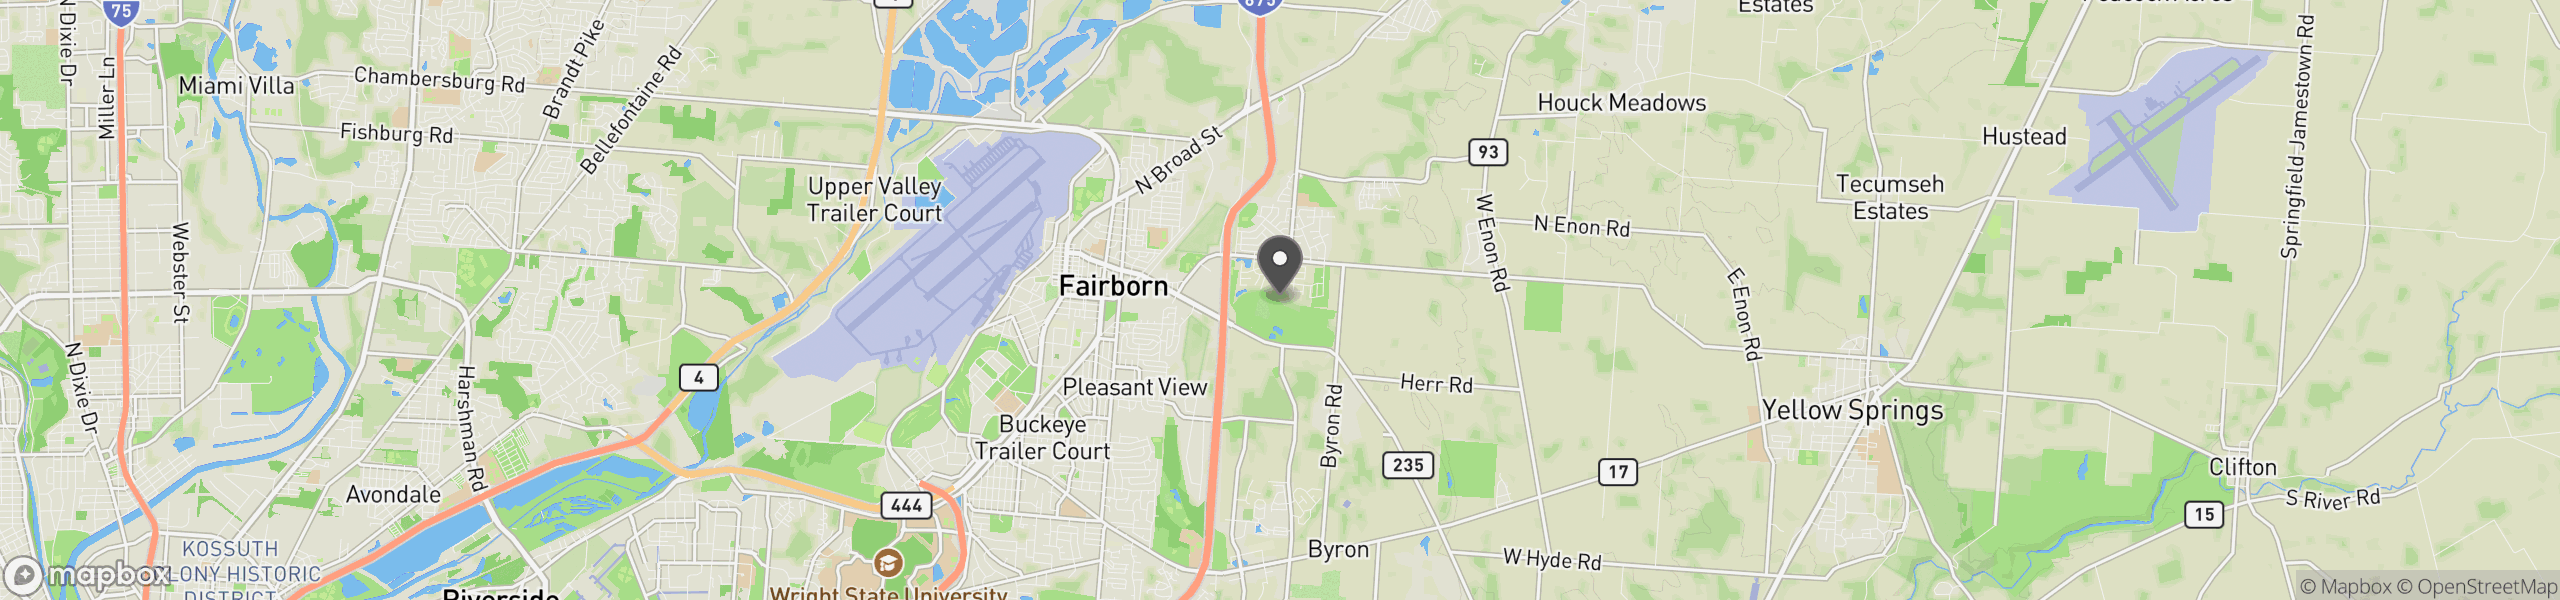 Fairborn, OH